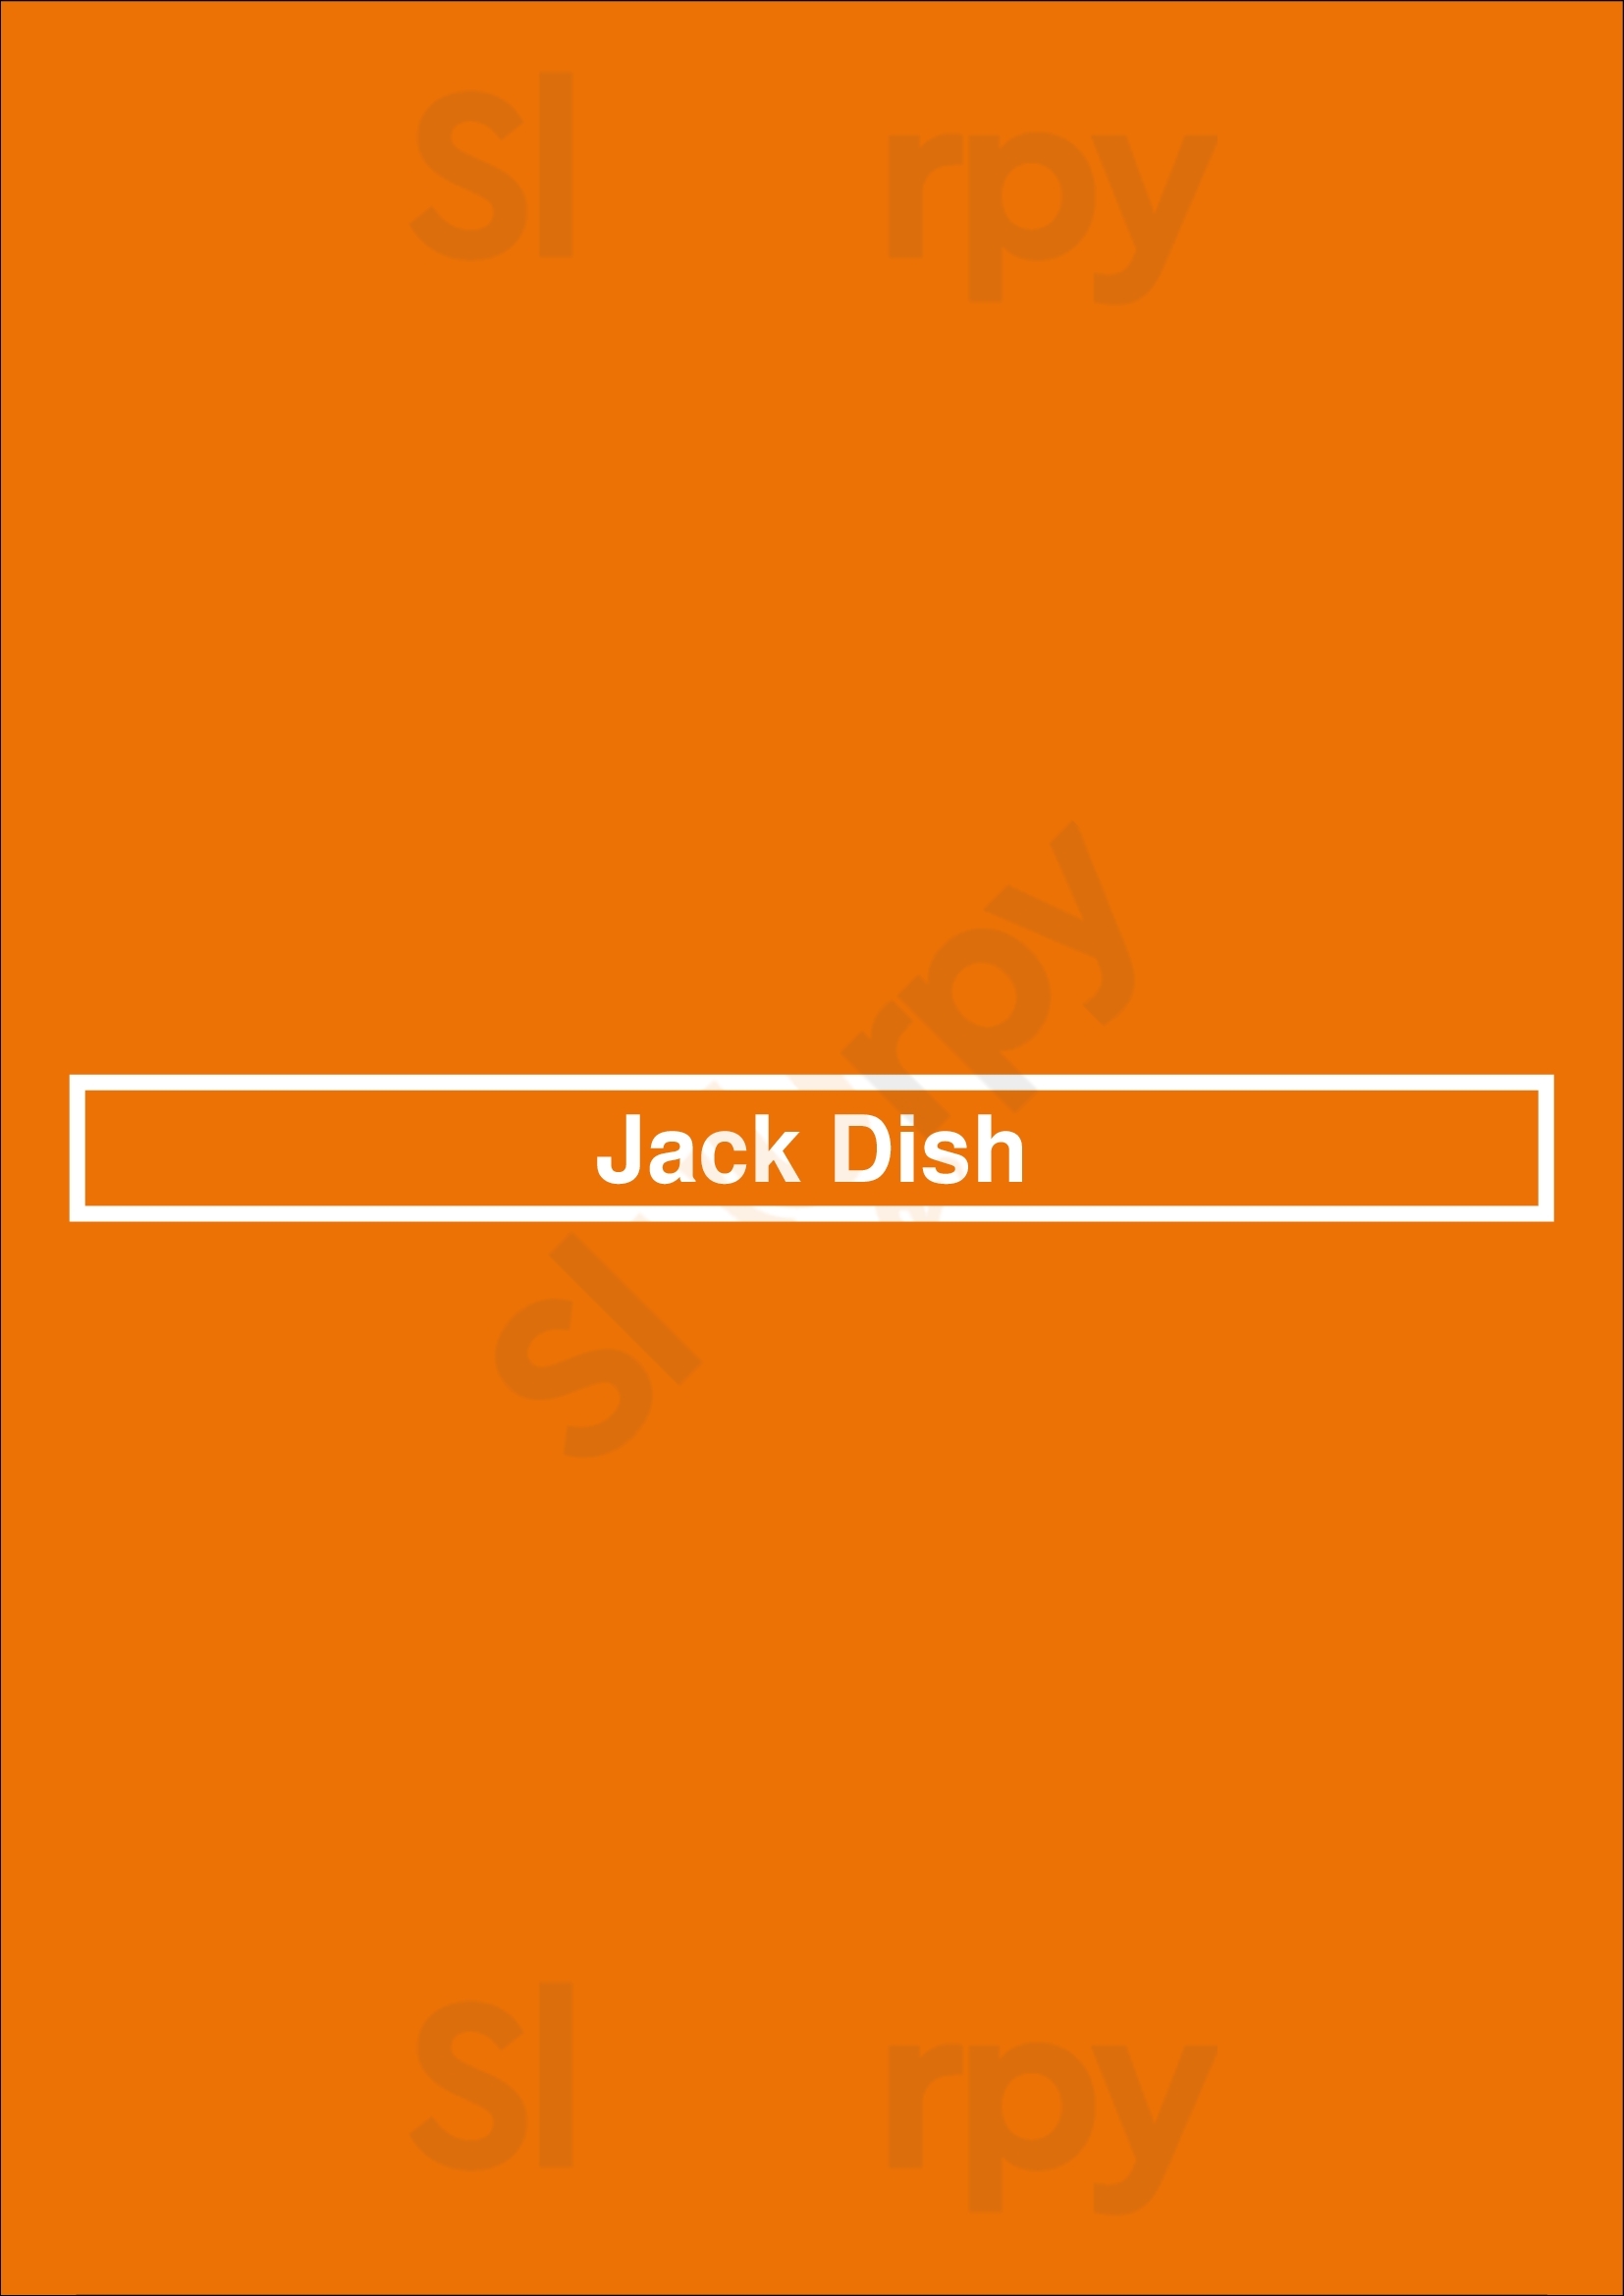 Jack Dish Amsterdam Menu - 1